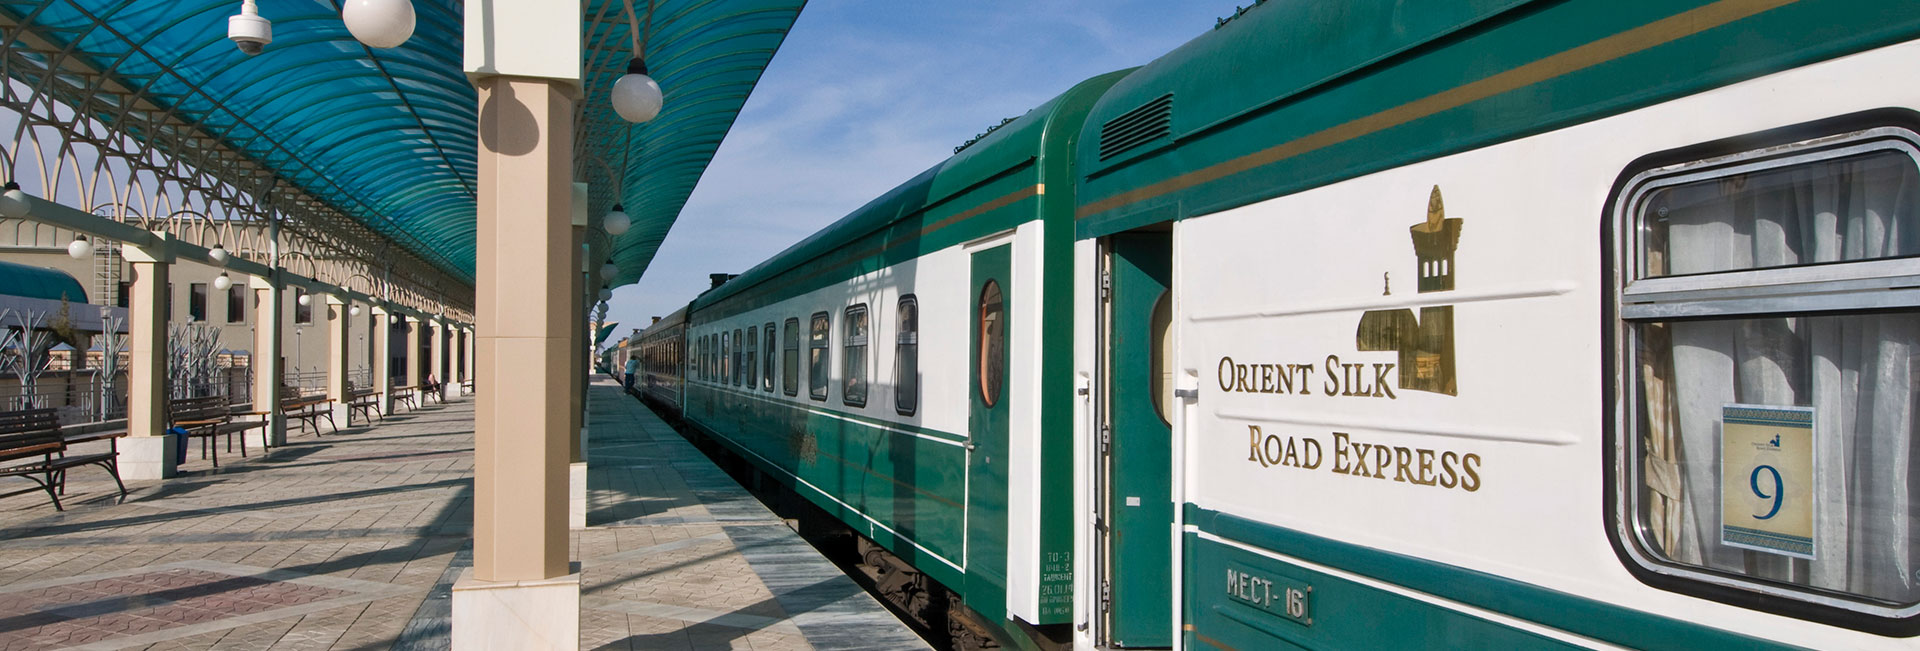 The Orient Silk Road Express Train